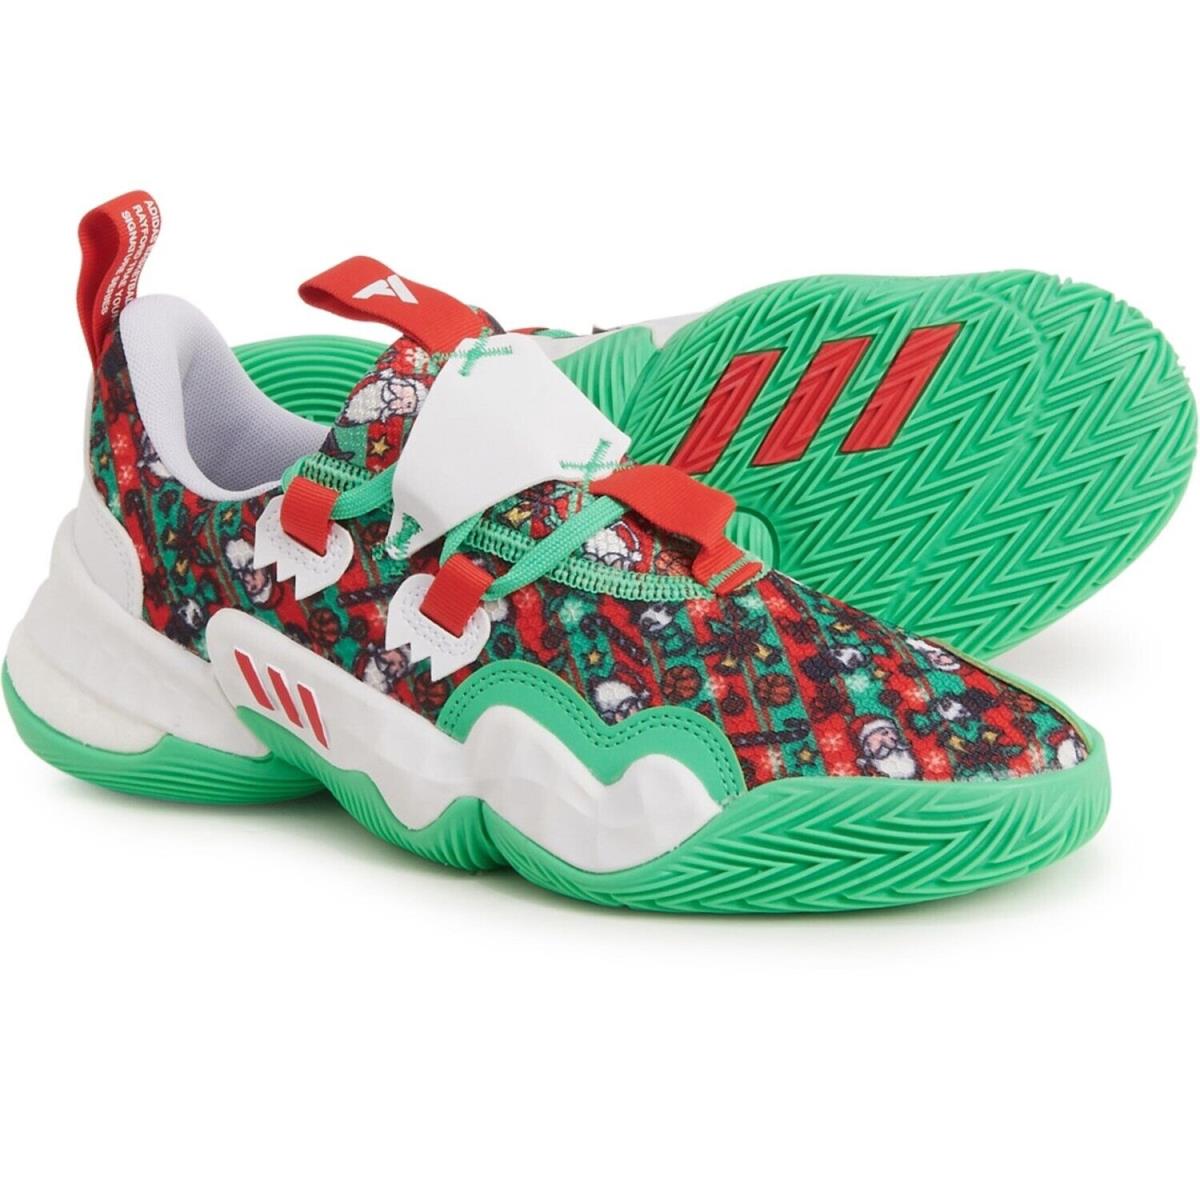 Adidas Trae Young 1 Shoes Men Sz 4.5 / Women Sz 5.5 Green Red Christmas GY0305